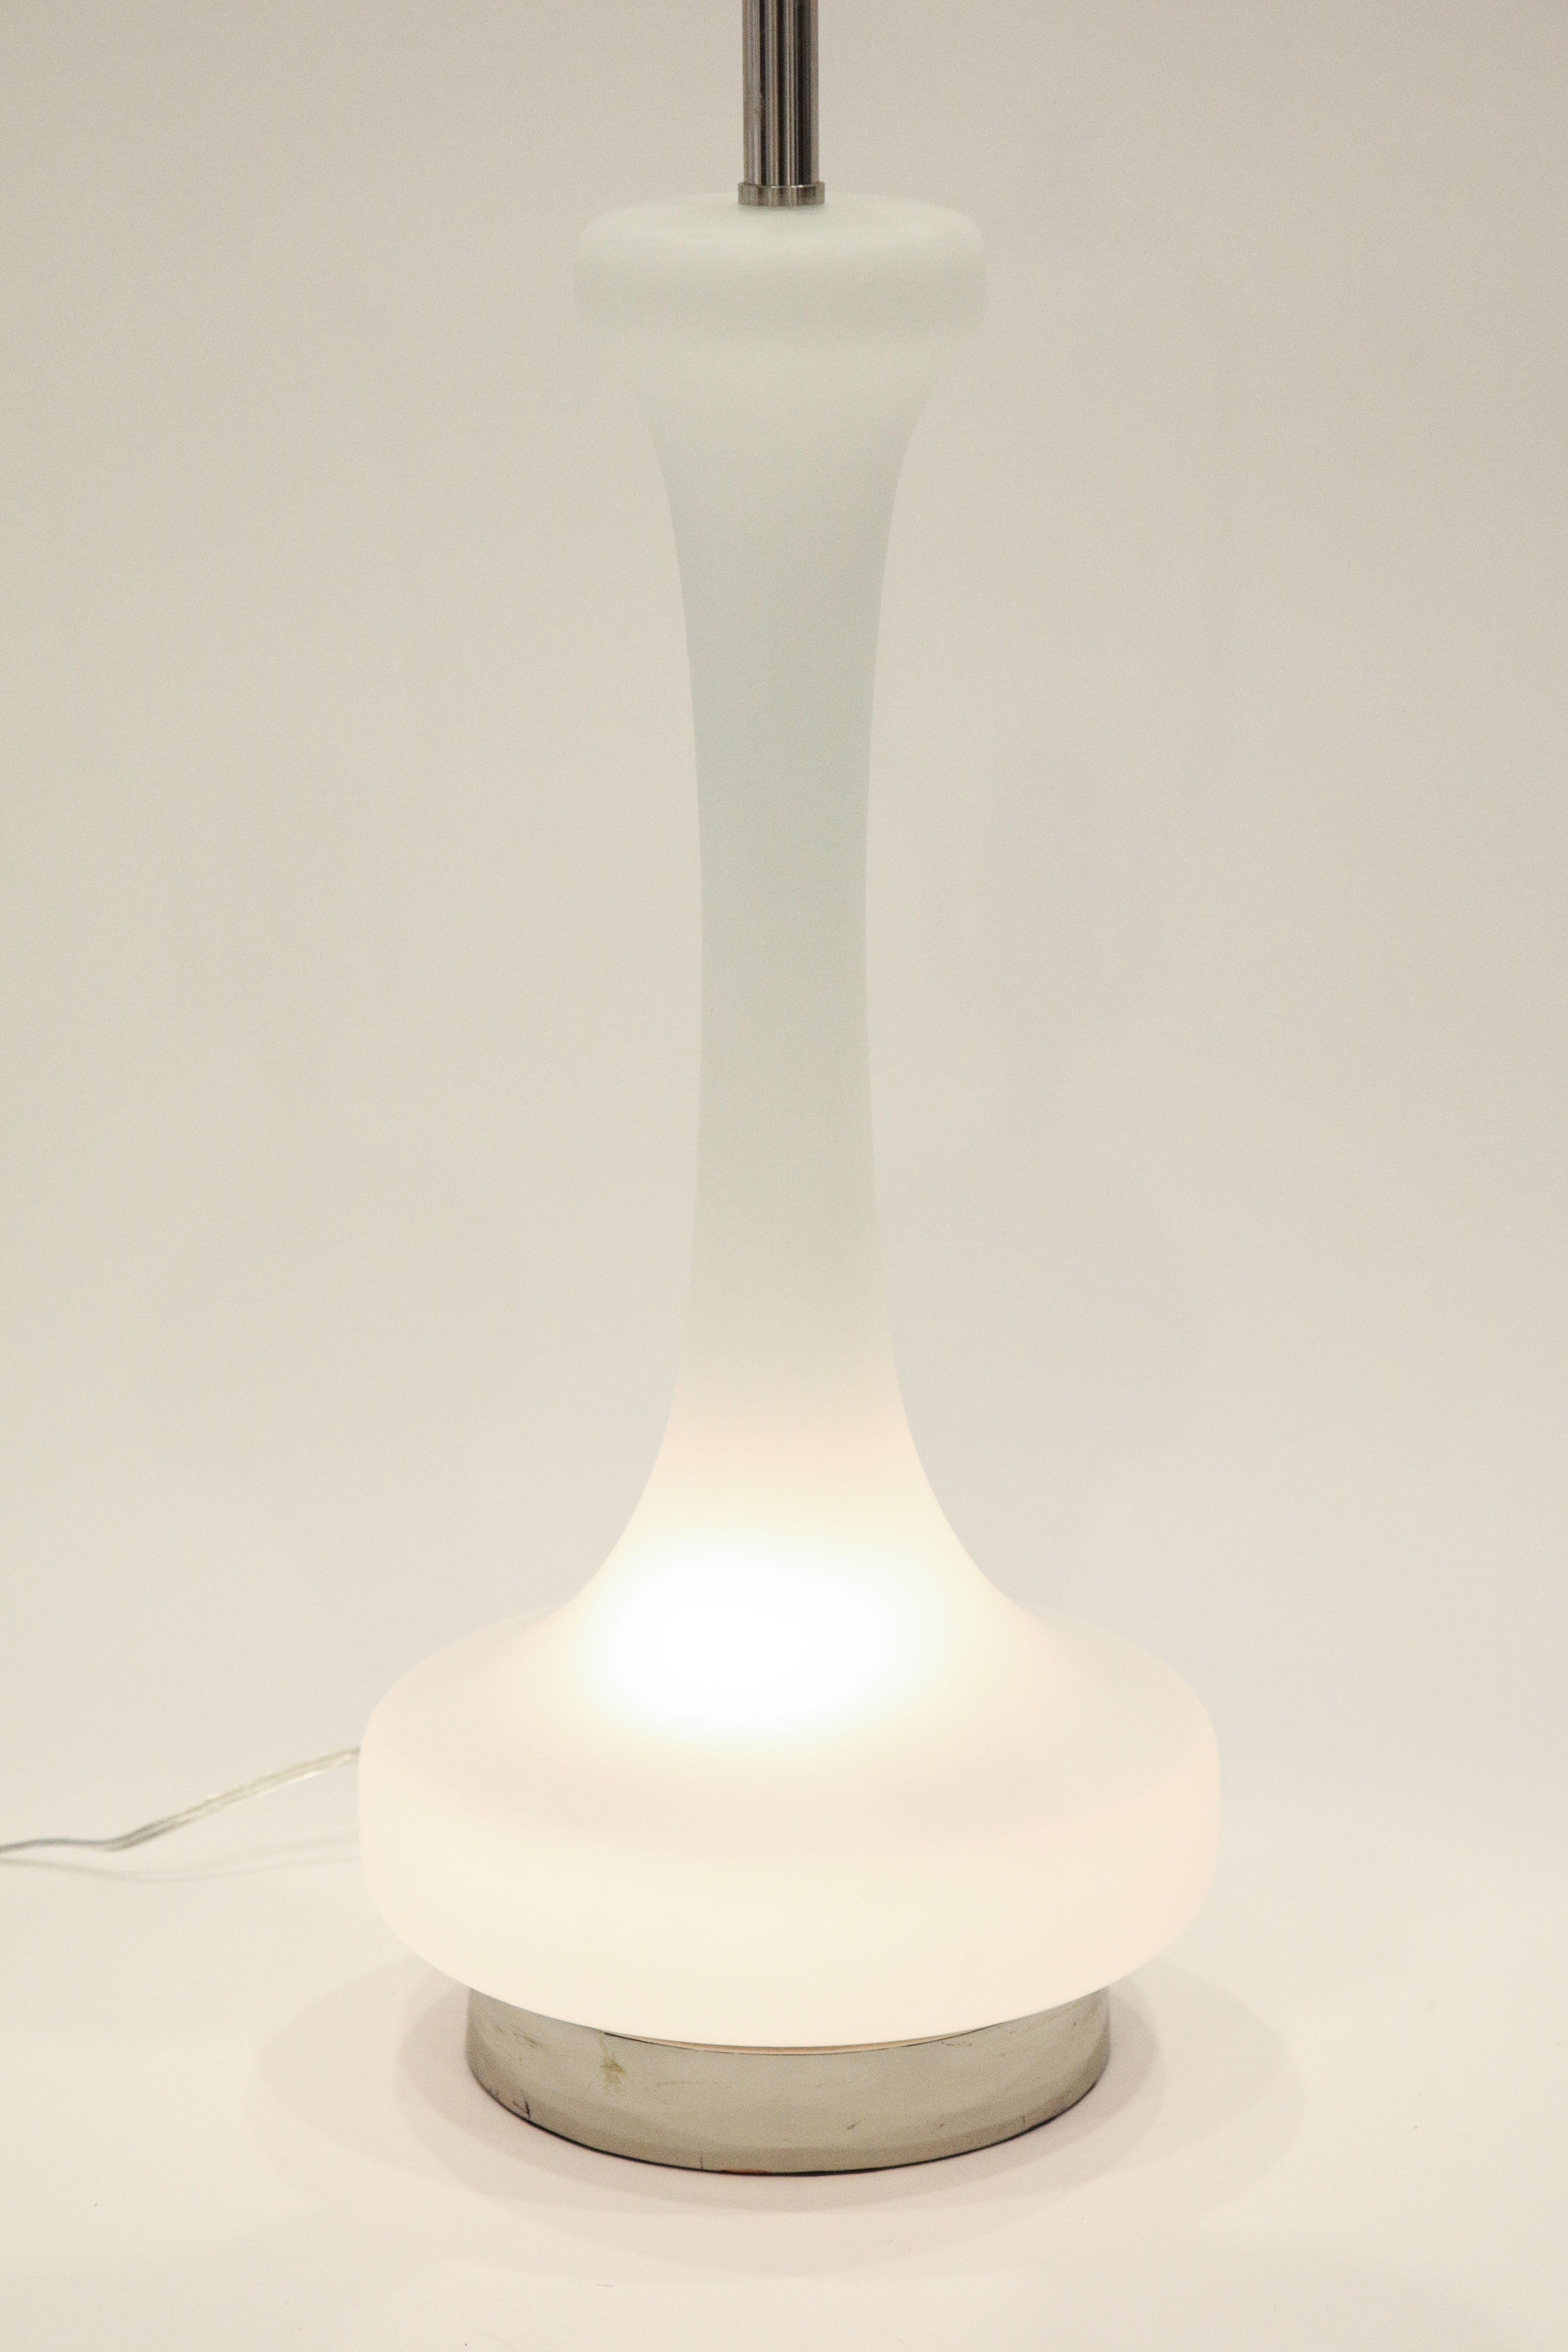 Pair of 1970s Lamps by Laurel Lamp Company (Mattiert)